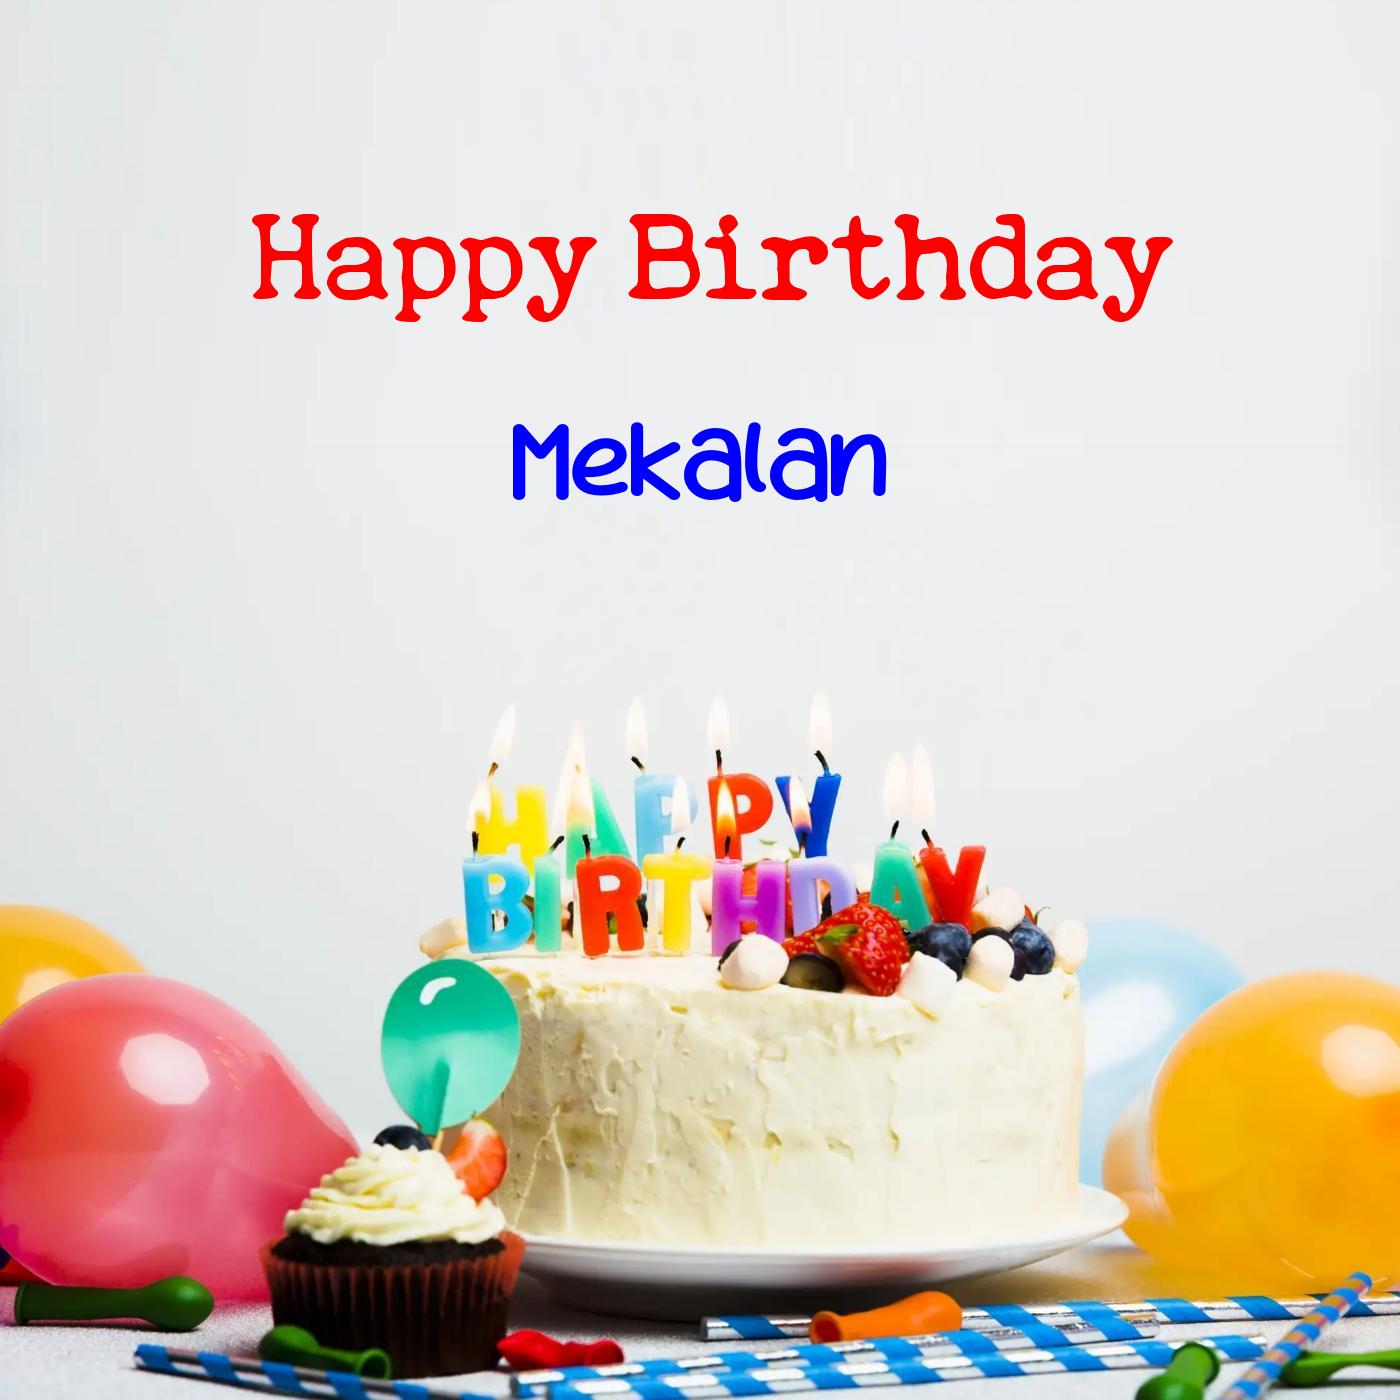 Happy Birthday Mekalan Cake Balloons Card